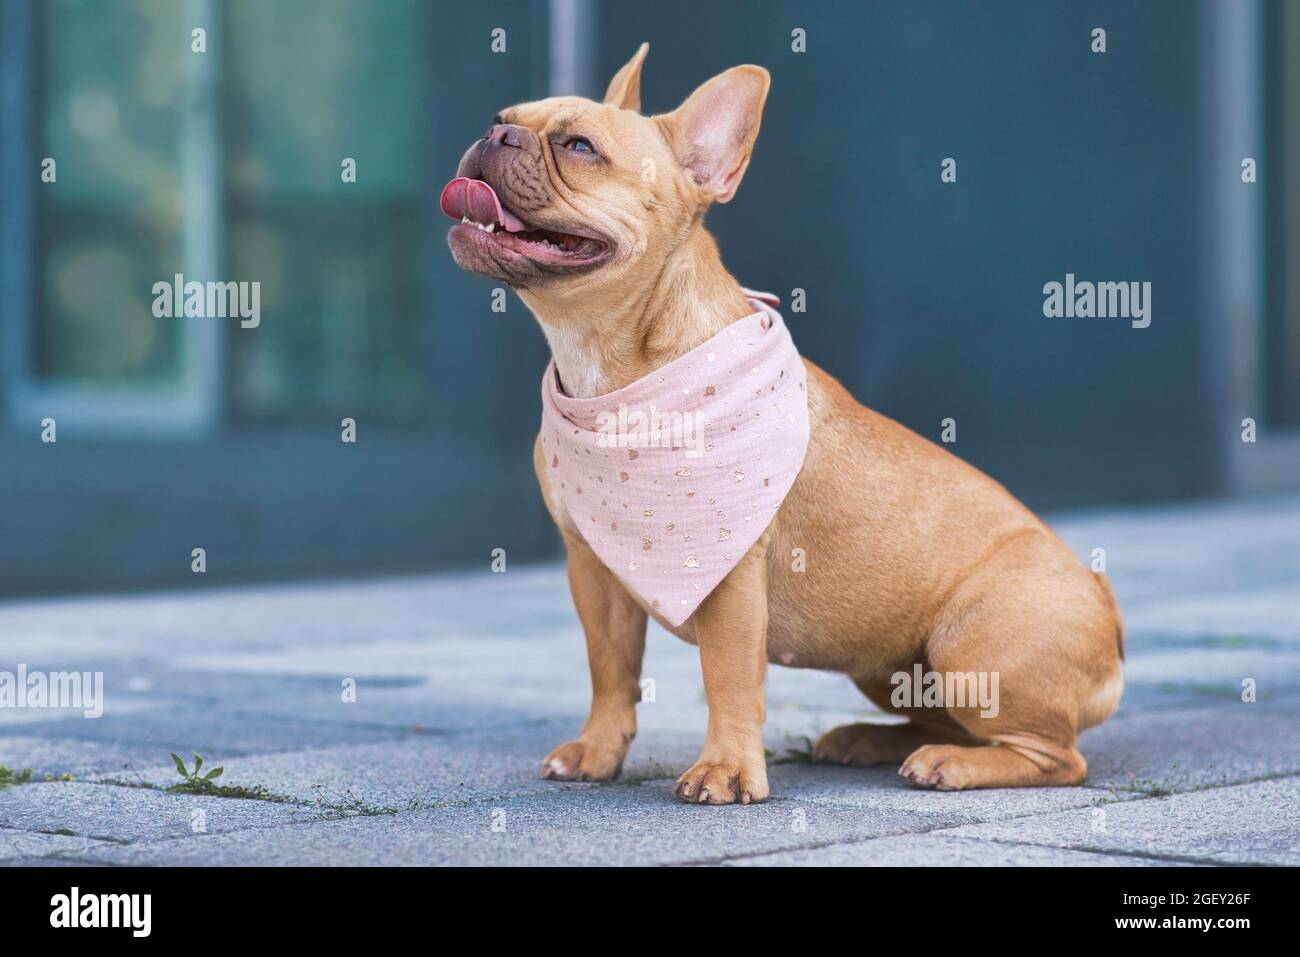 Sitting French Bulldog dog wearing pink bandanna around neck Stock Photo